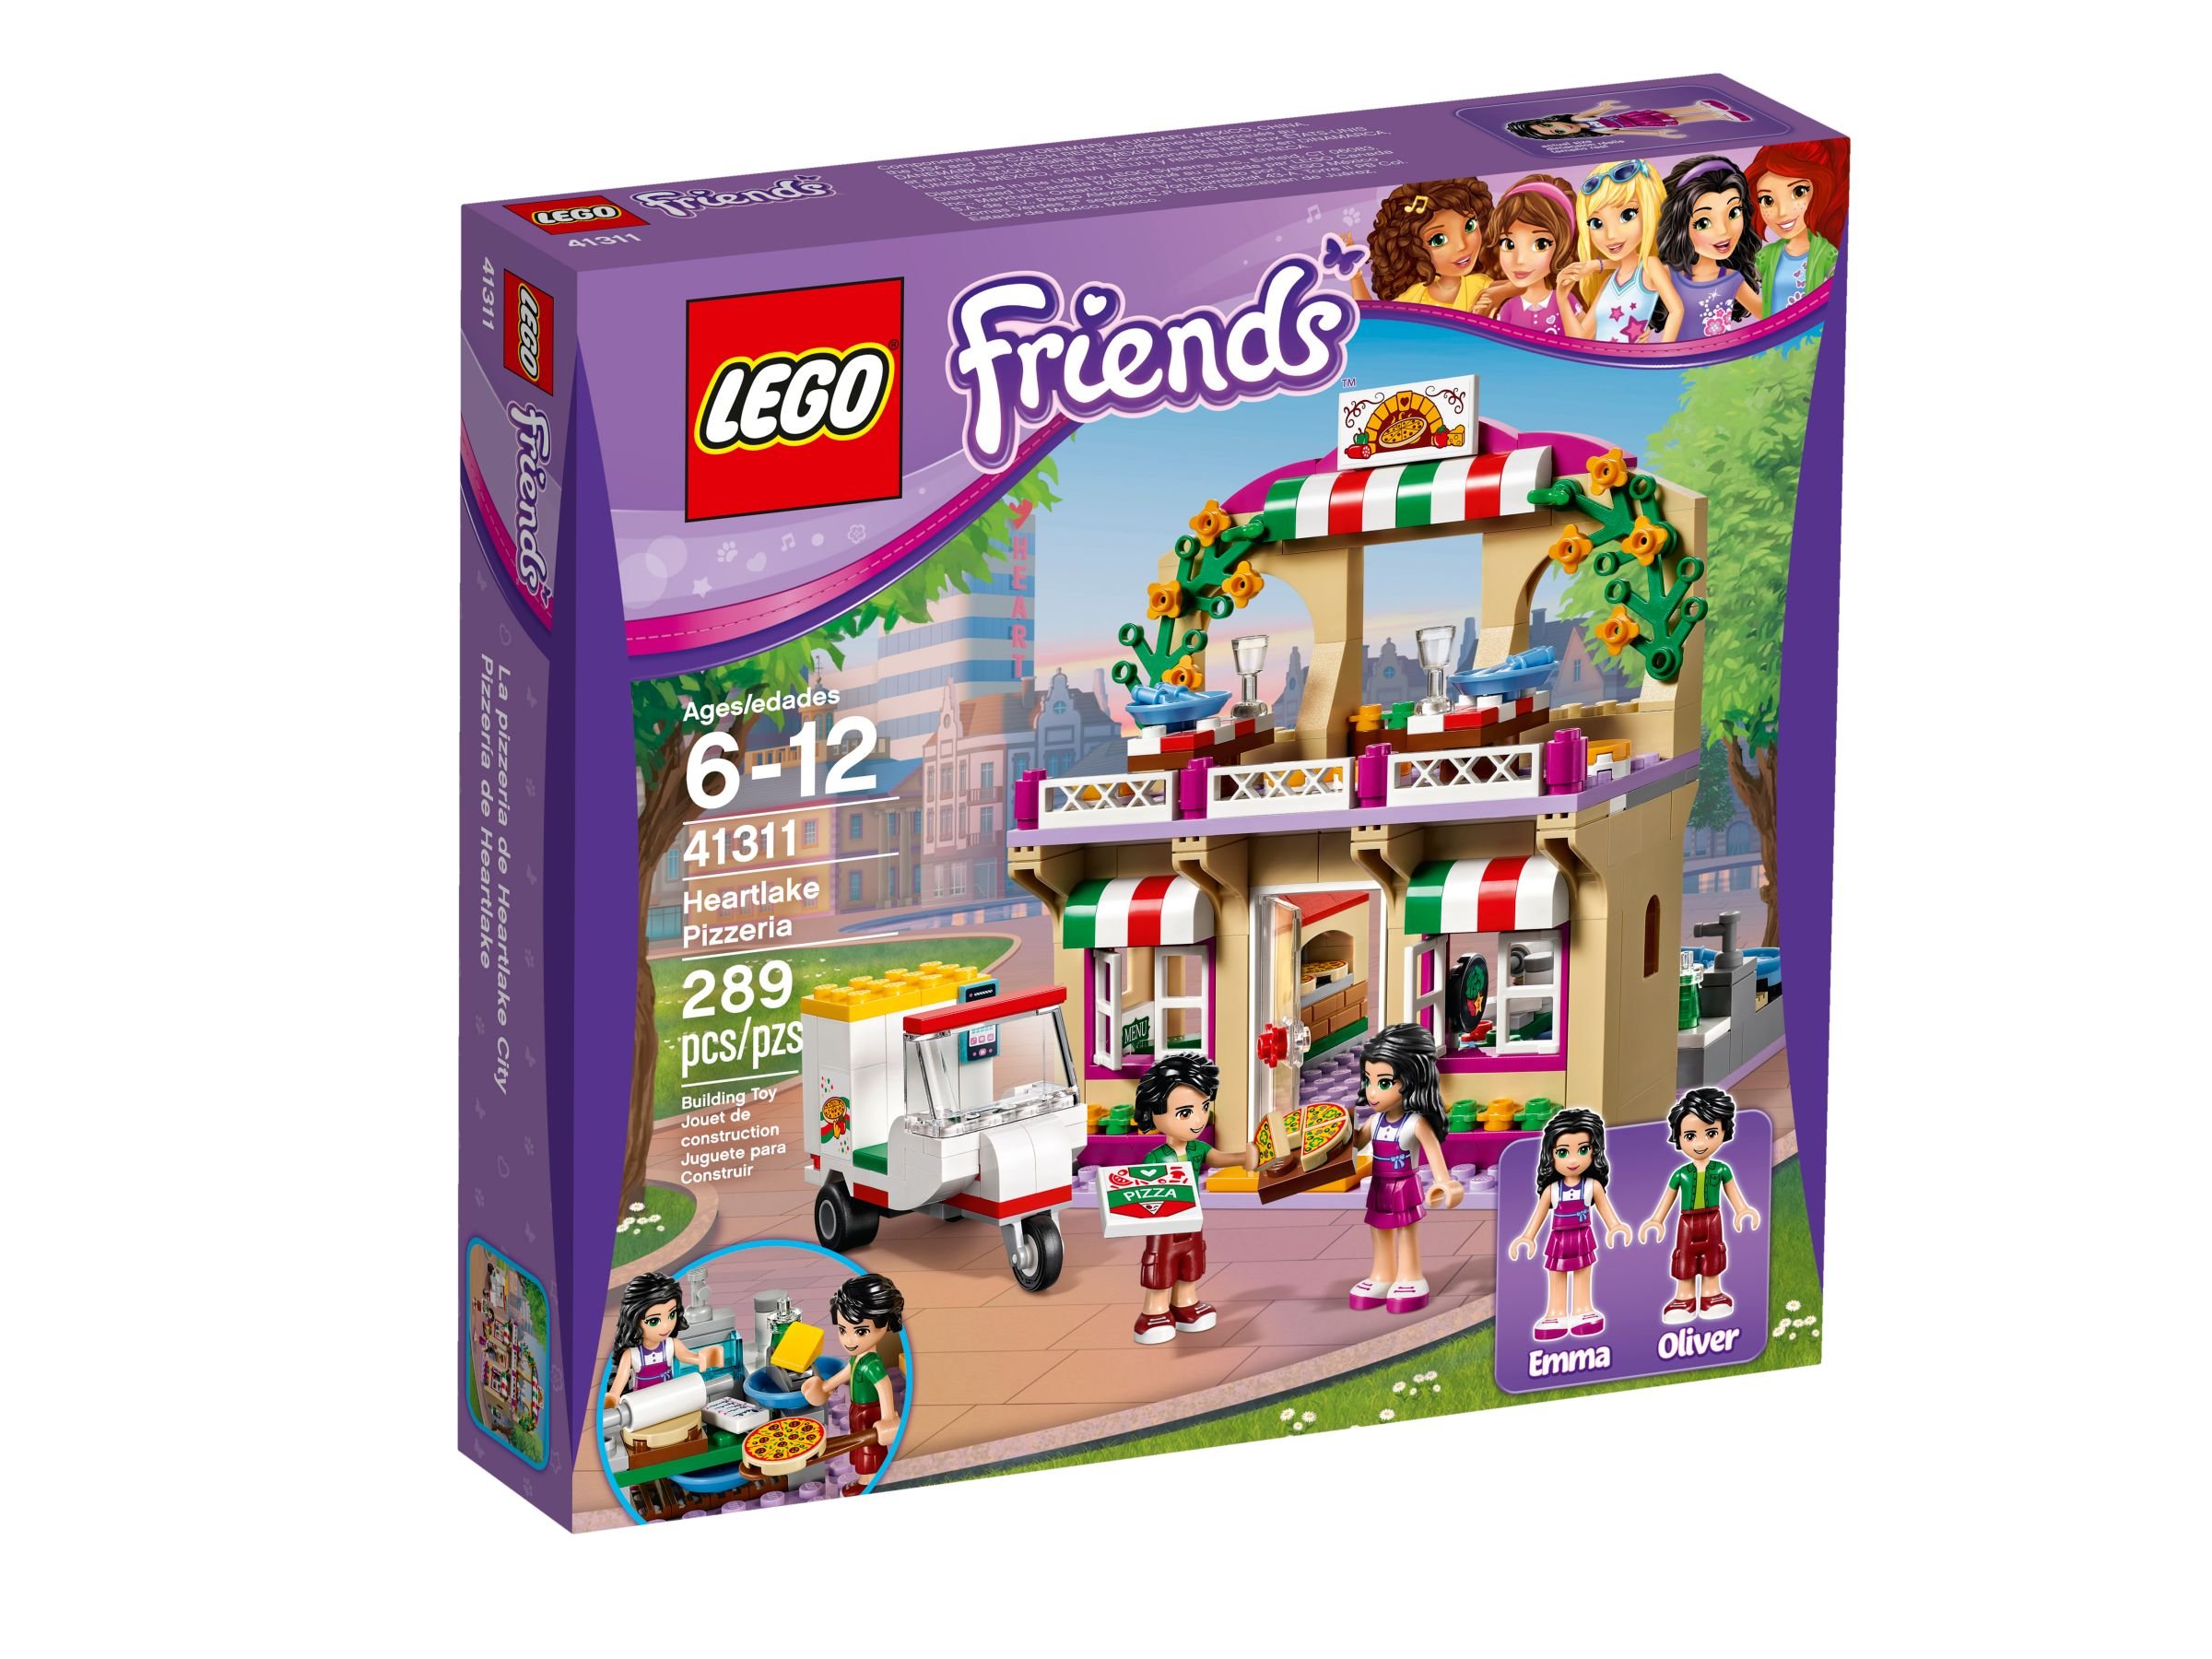 LEGO Friends 41311 Heartlake Pizzeria LEGO_41311_alt1.jpg